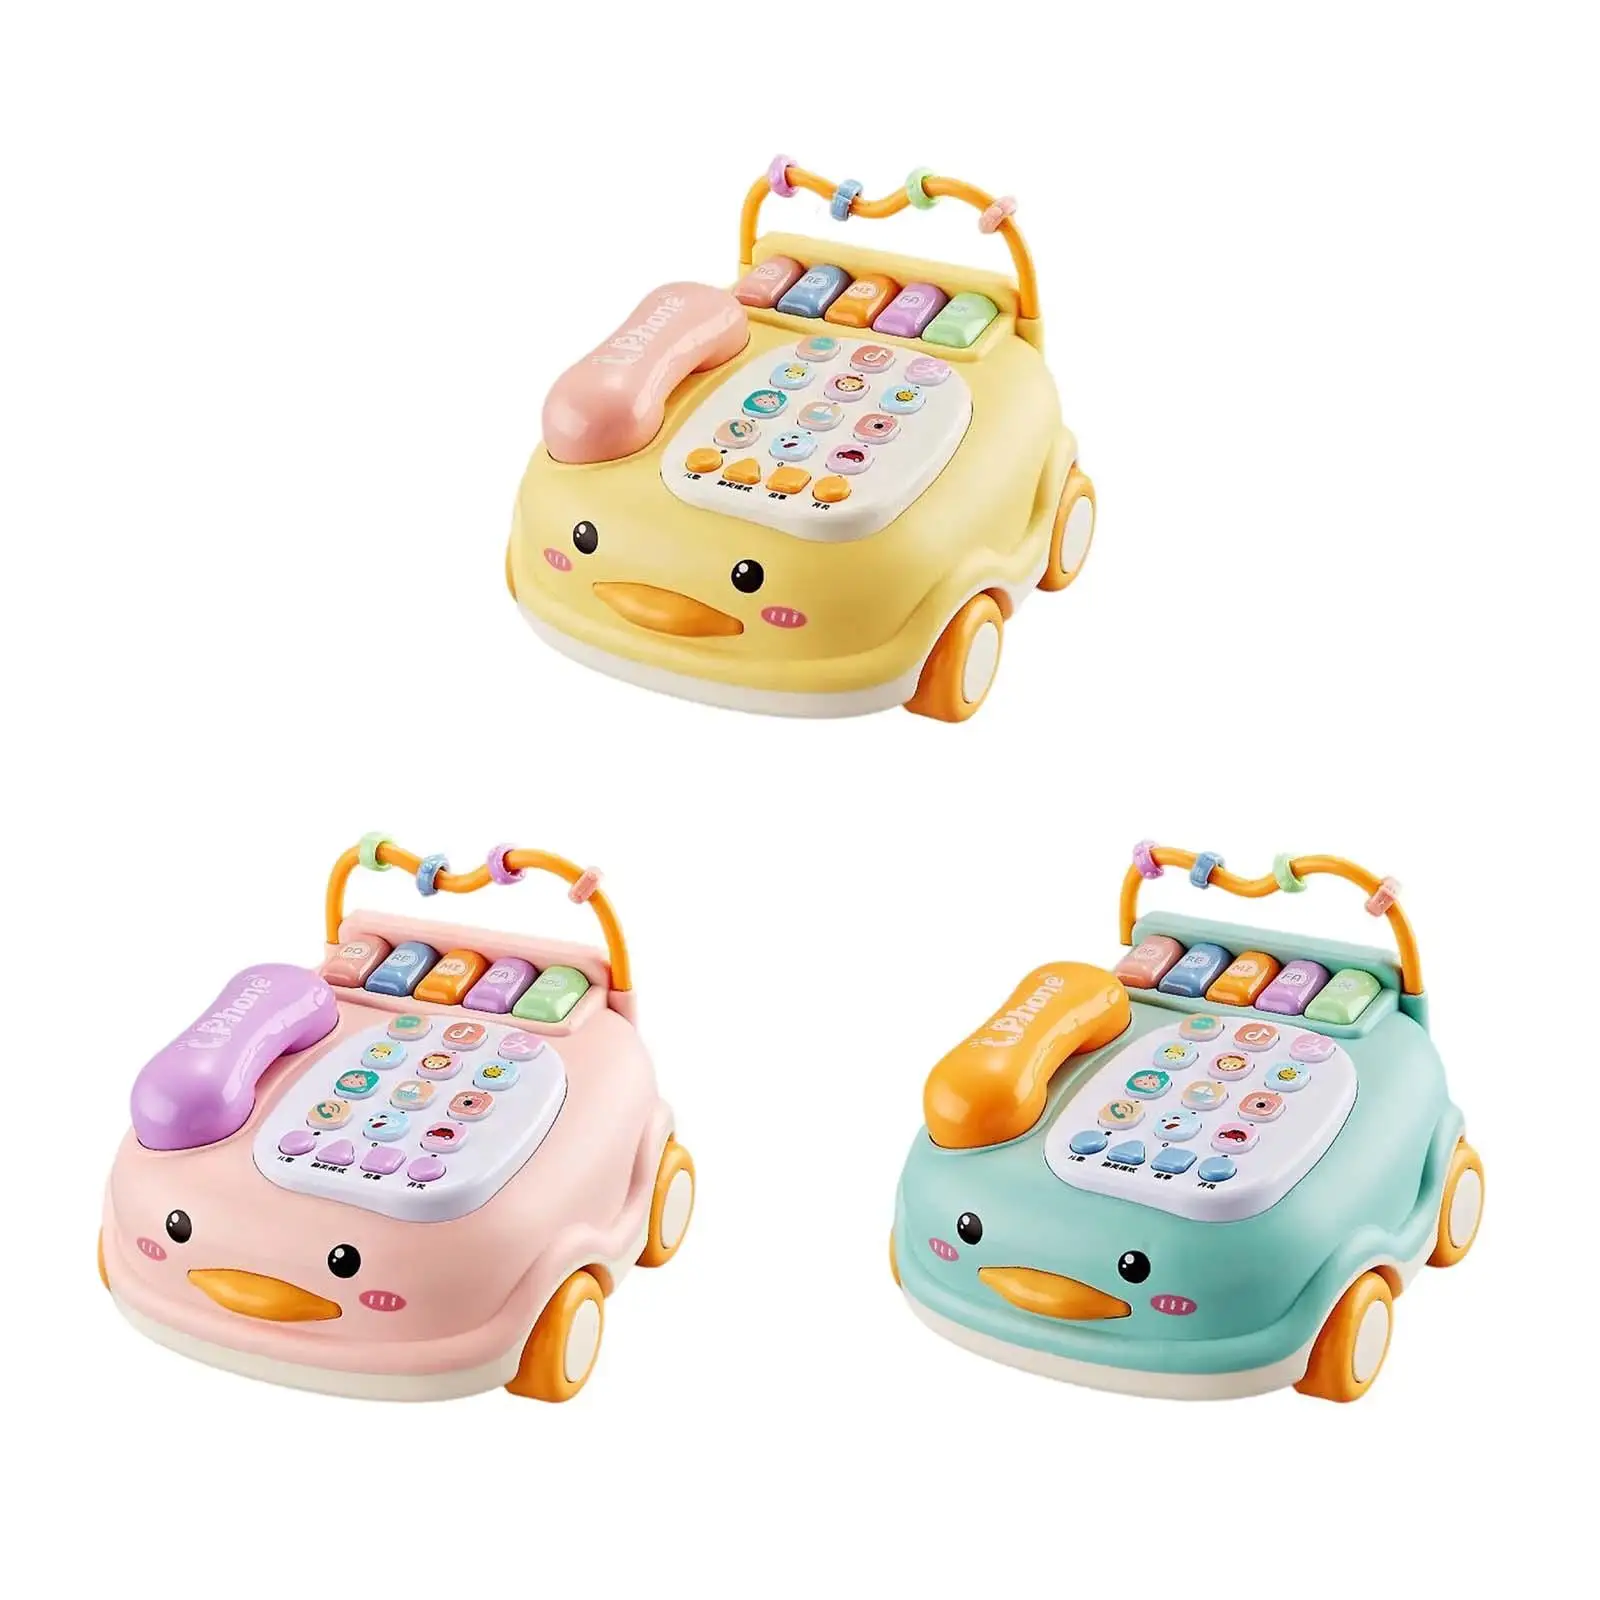 Montessori Lights Pretend Phone Cognitive Development Games for Early Education Gift Boy Children Preschool Educational Learning